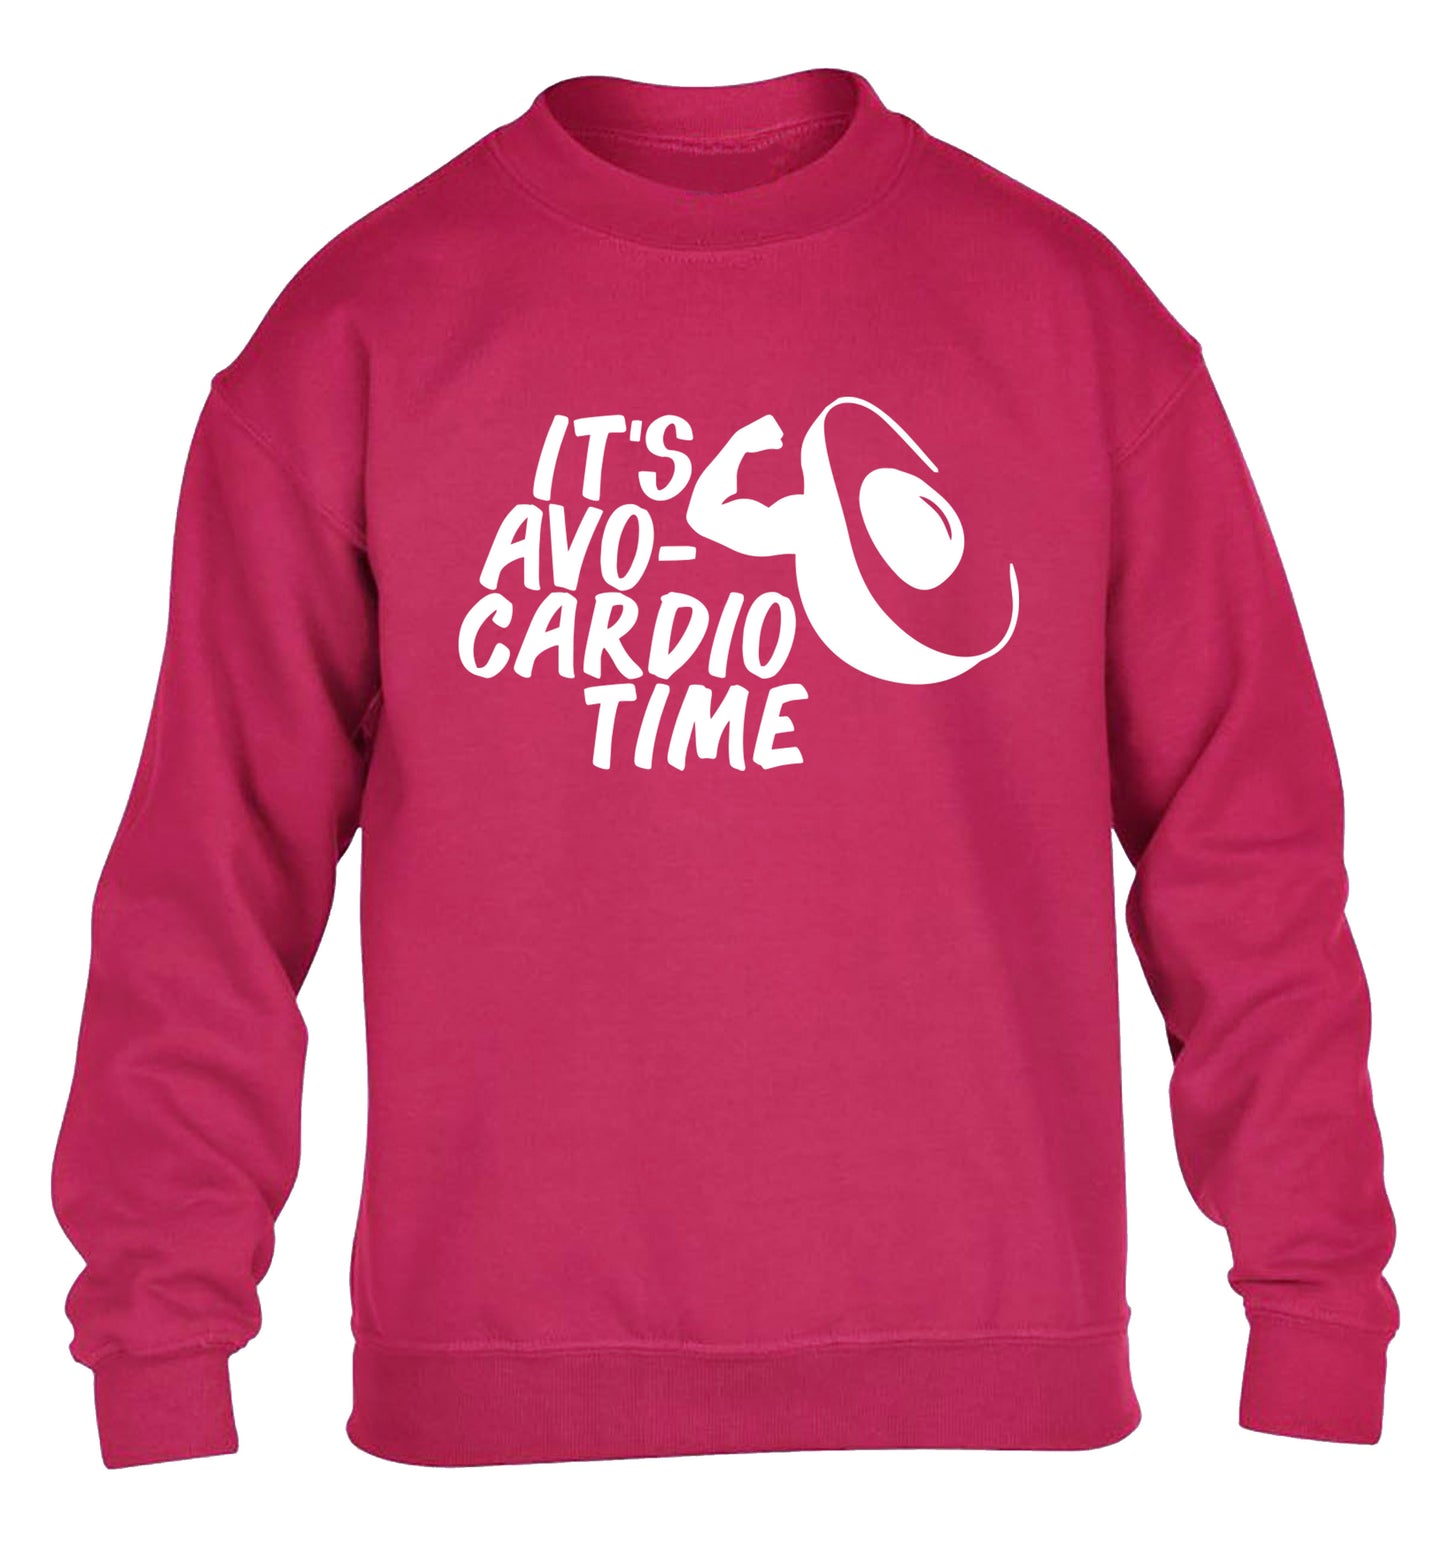 It's avo-cardio time children's pink sweater 12-14 Years